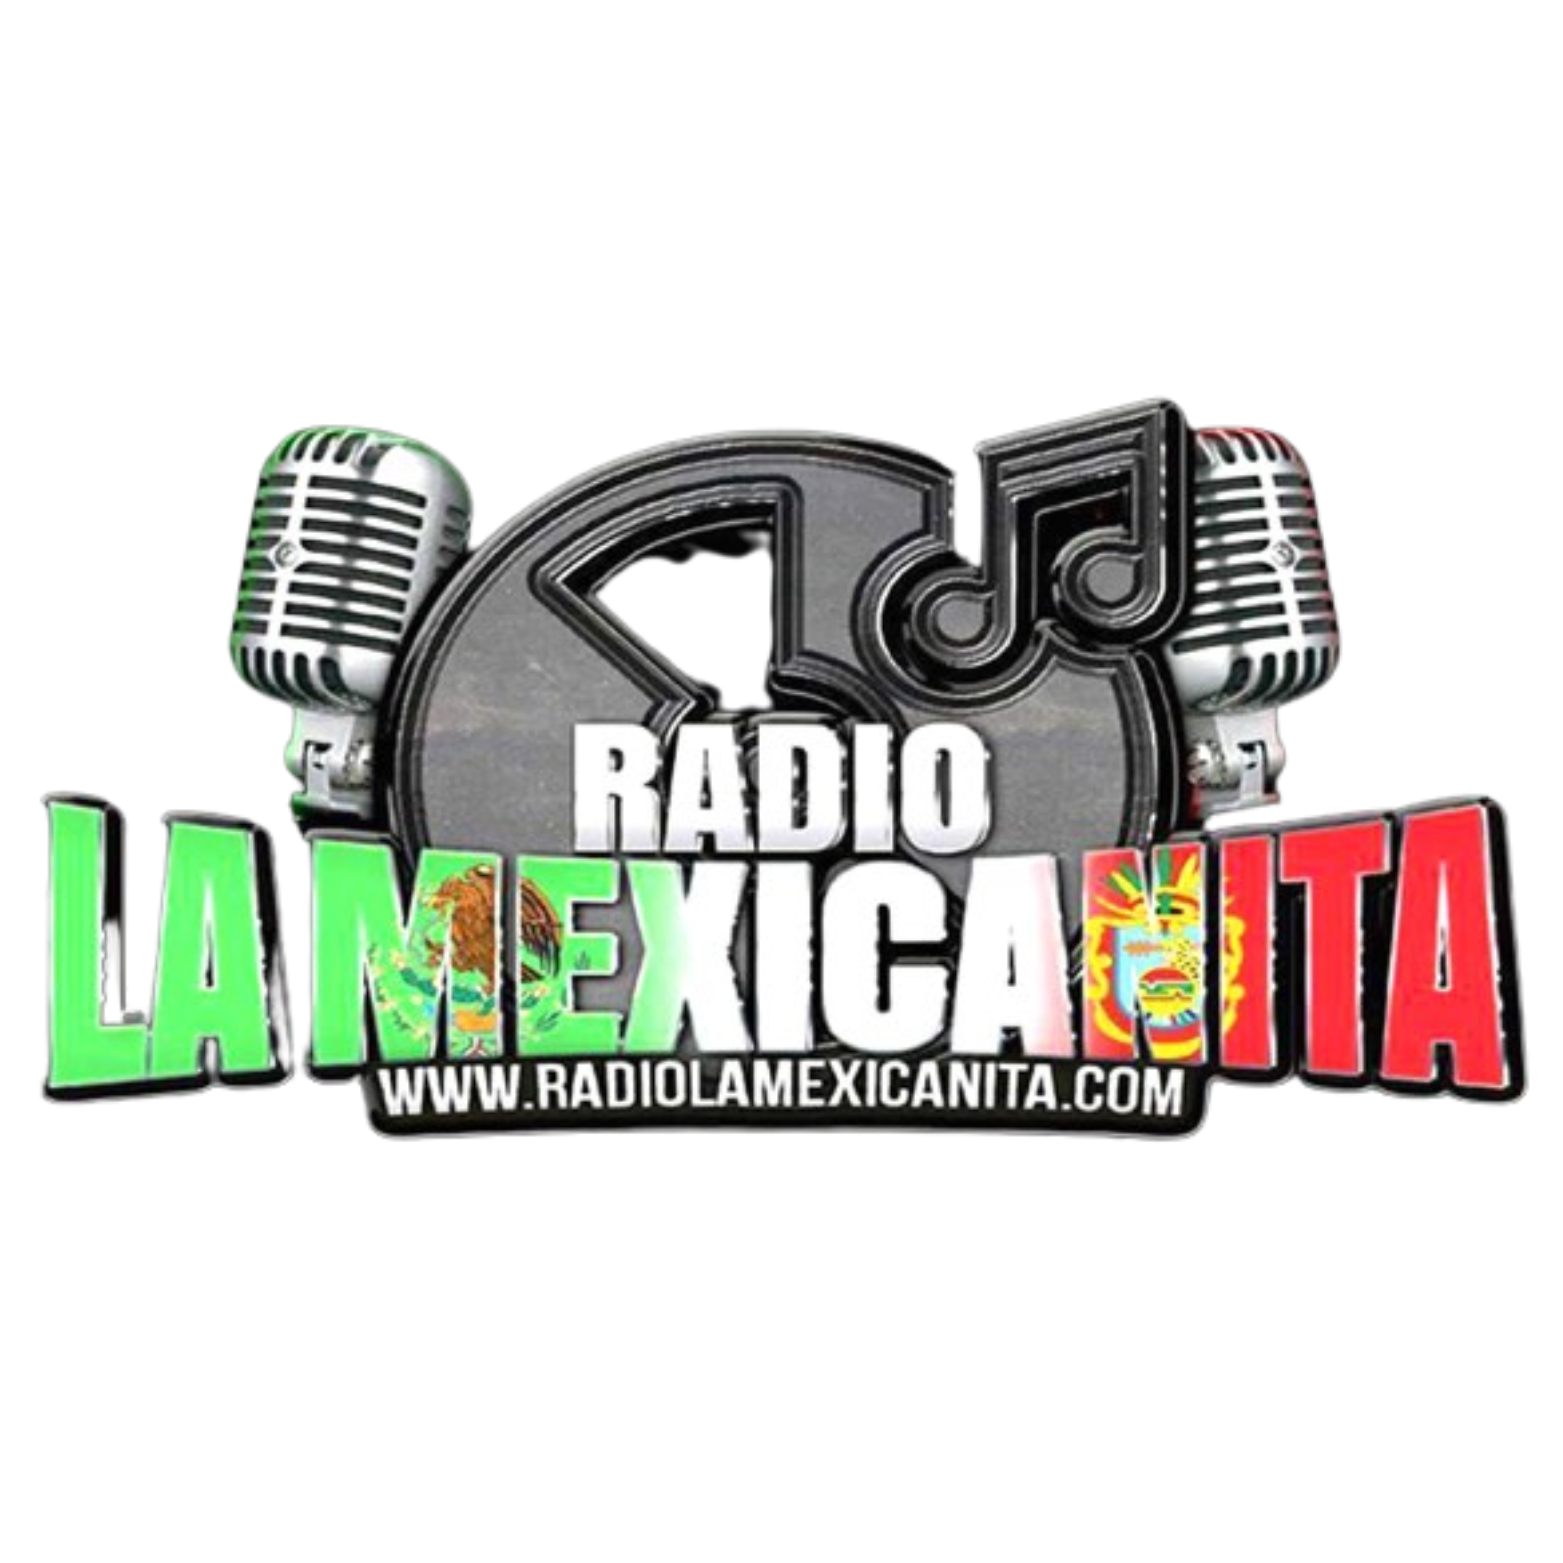 Radio La Mexicanita